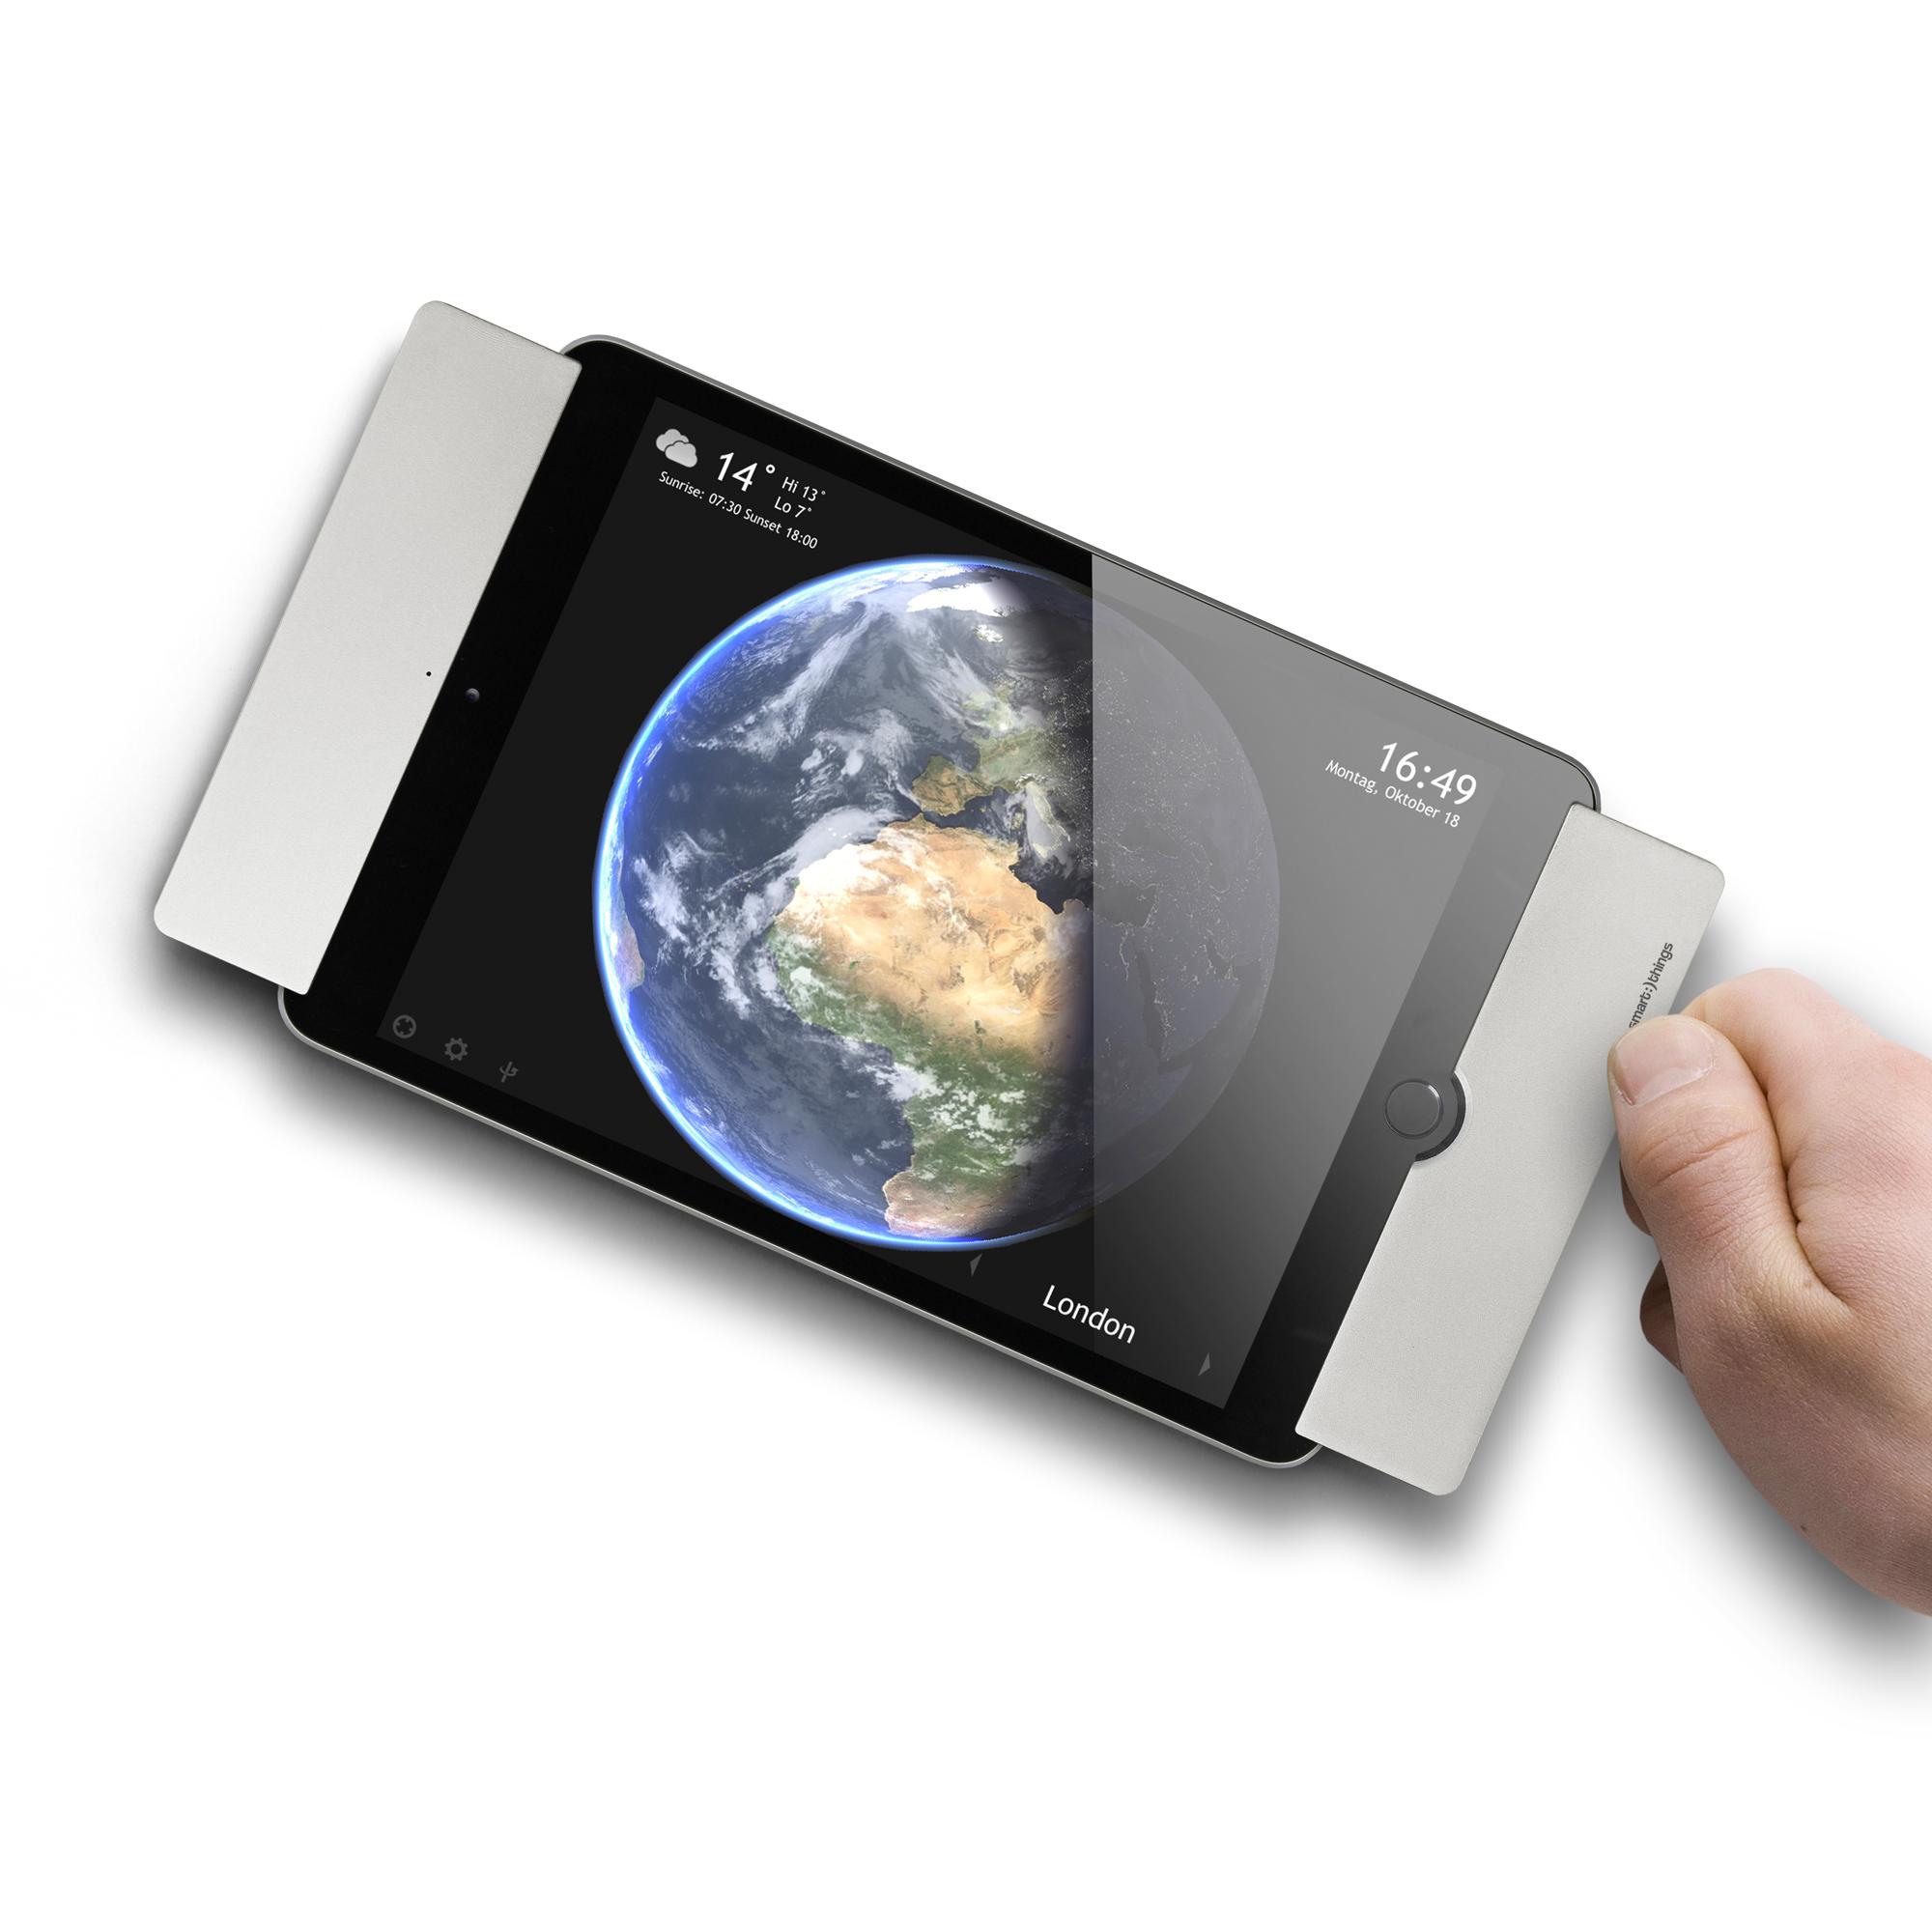 smart things sDock mini4 s18 Wandhalterung/Ladestation /Fotorahmen für iPad Mini 4,5 - Silber